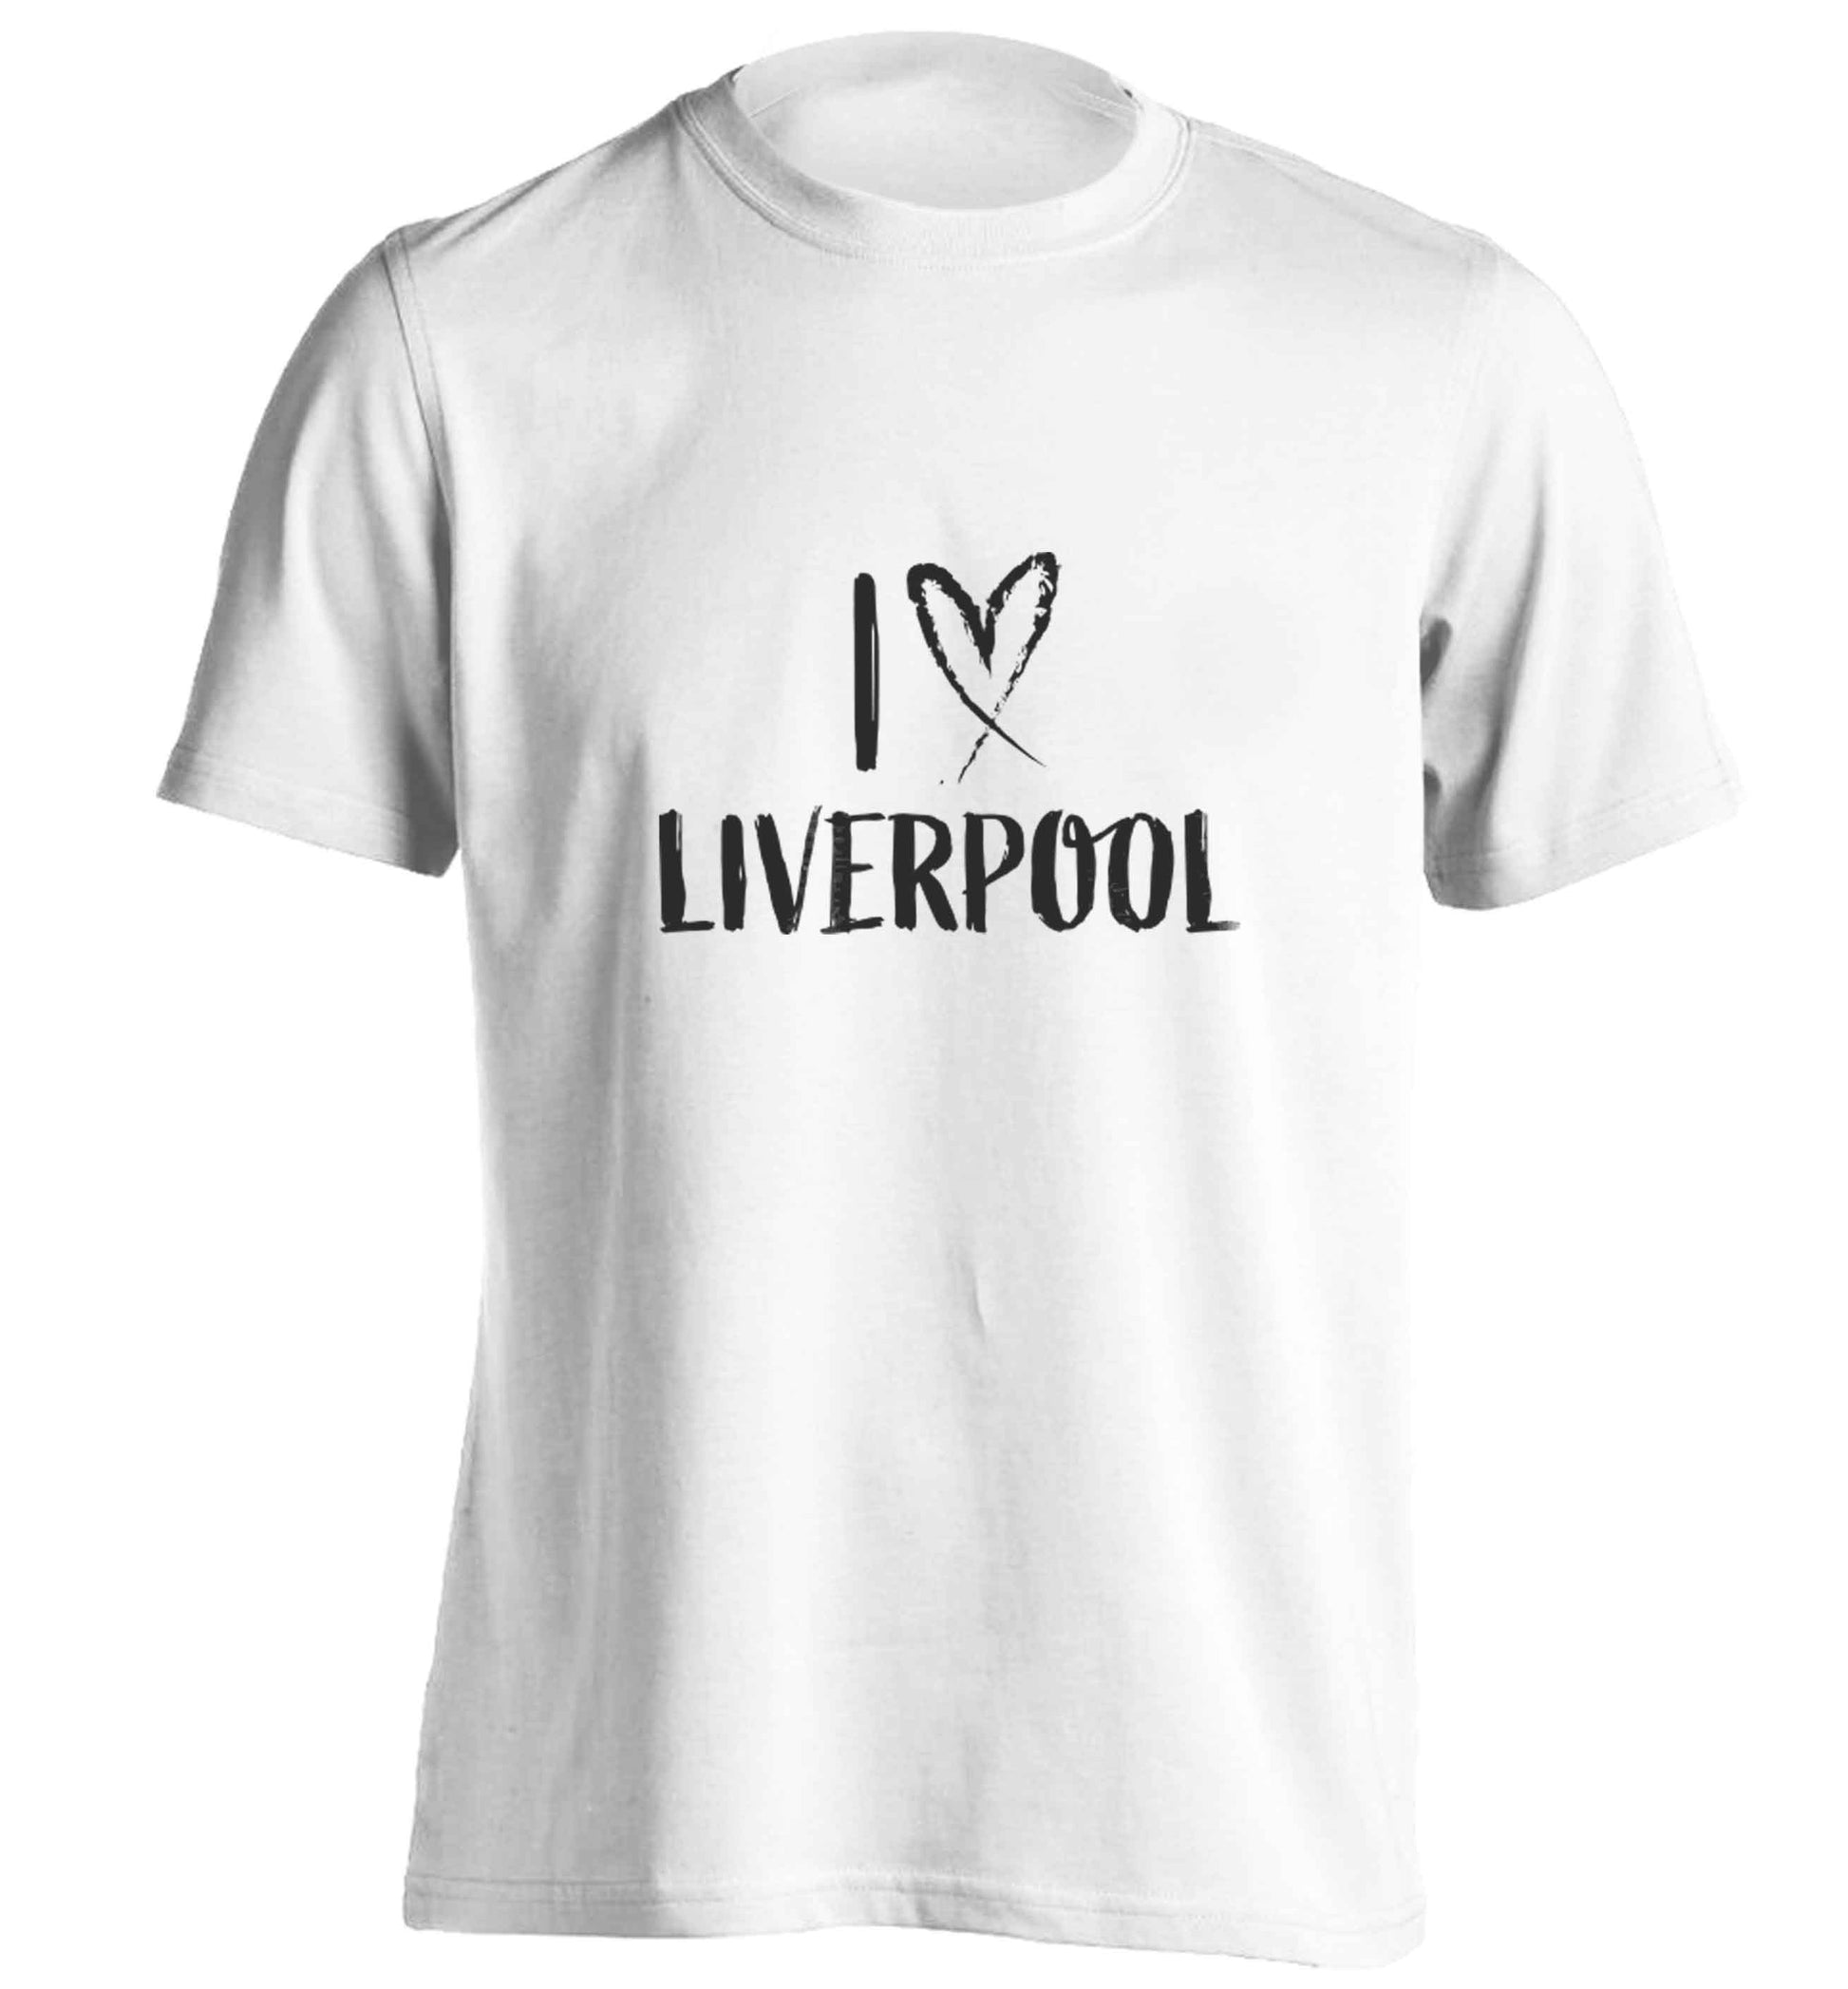 I love Liverpool adults unisex white Tshirt 2XL